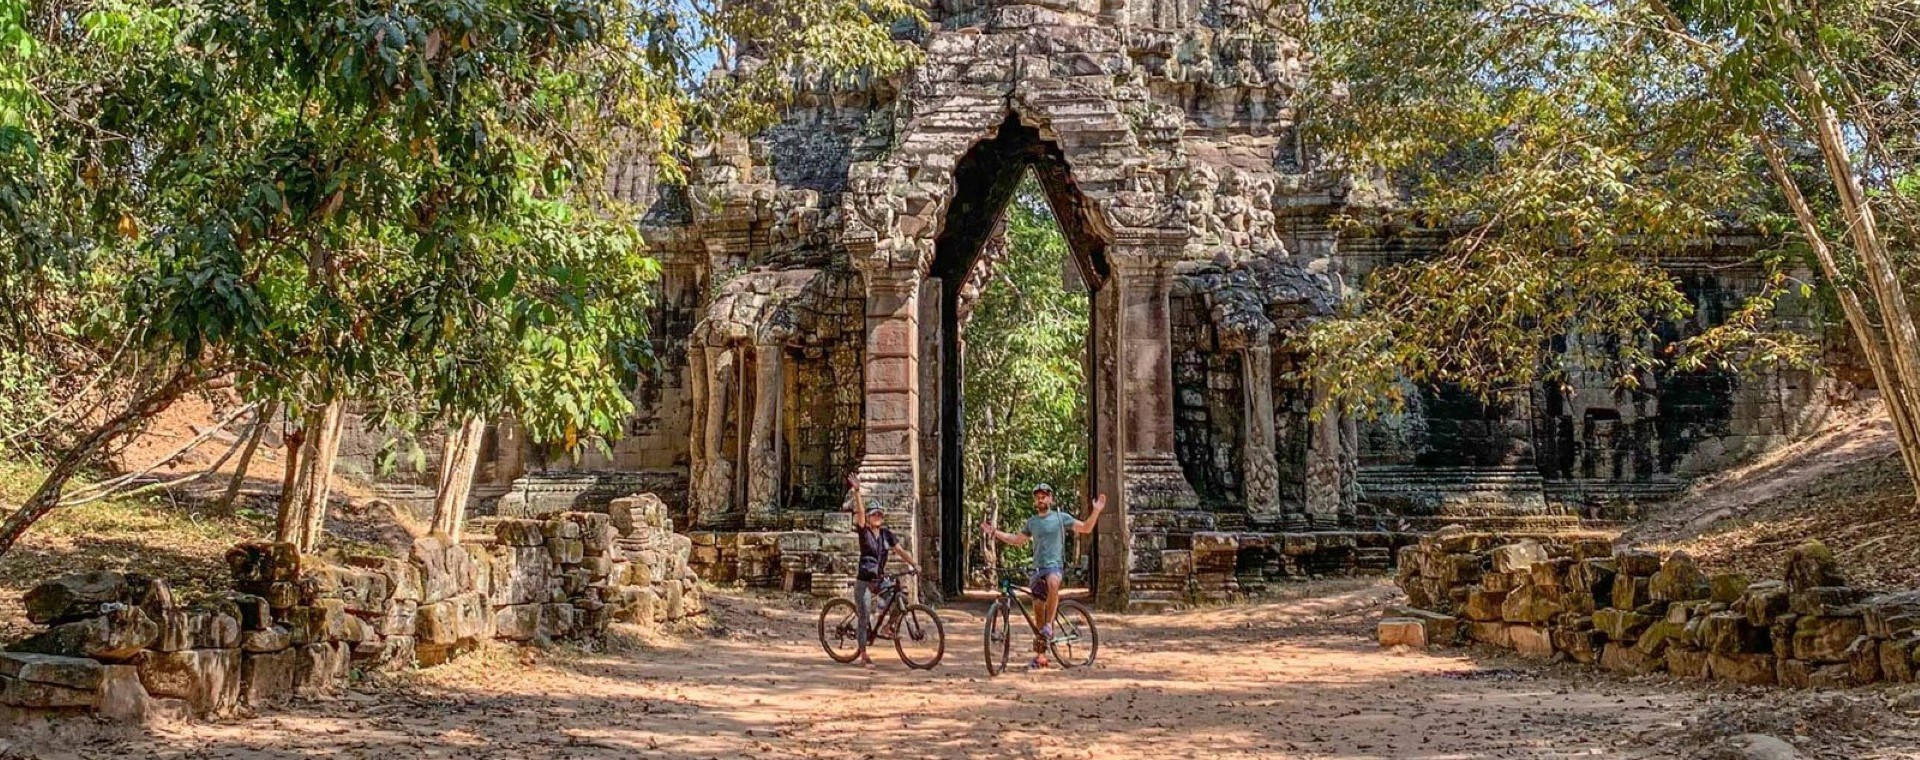 Cambodia Cycling Tour: Siem Reap 4 days 3 nights